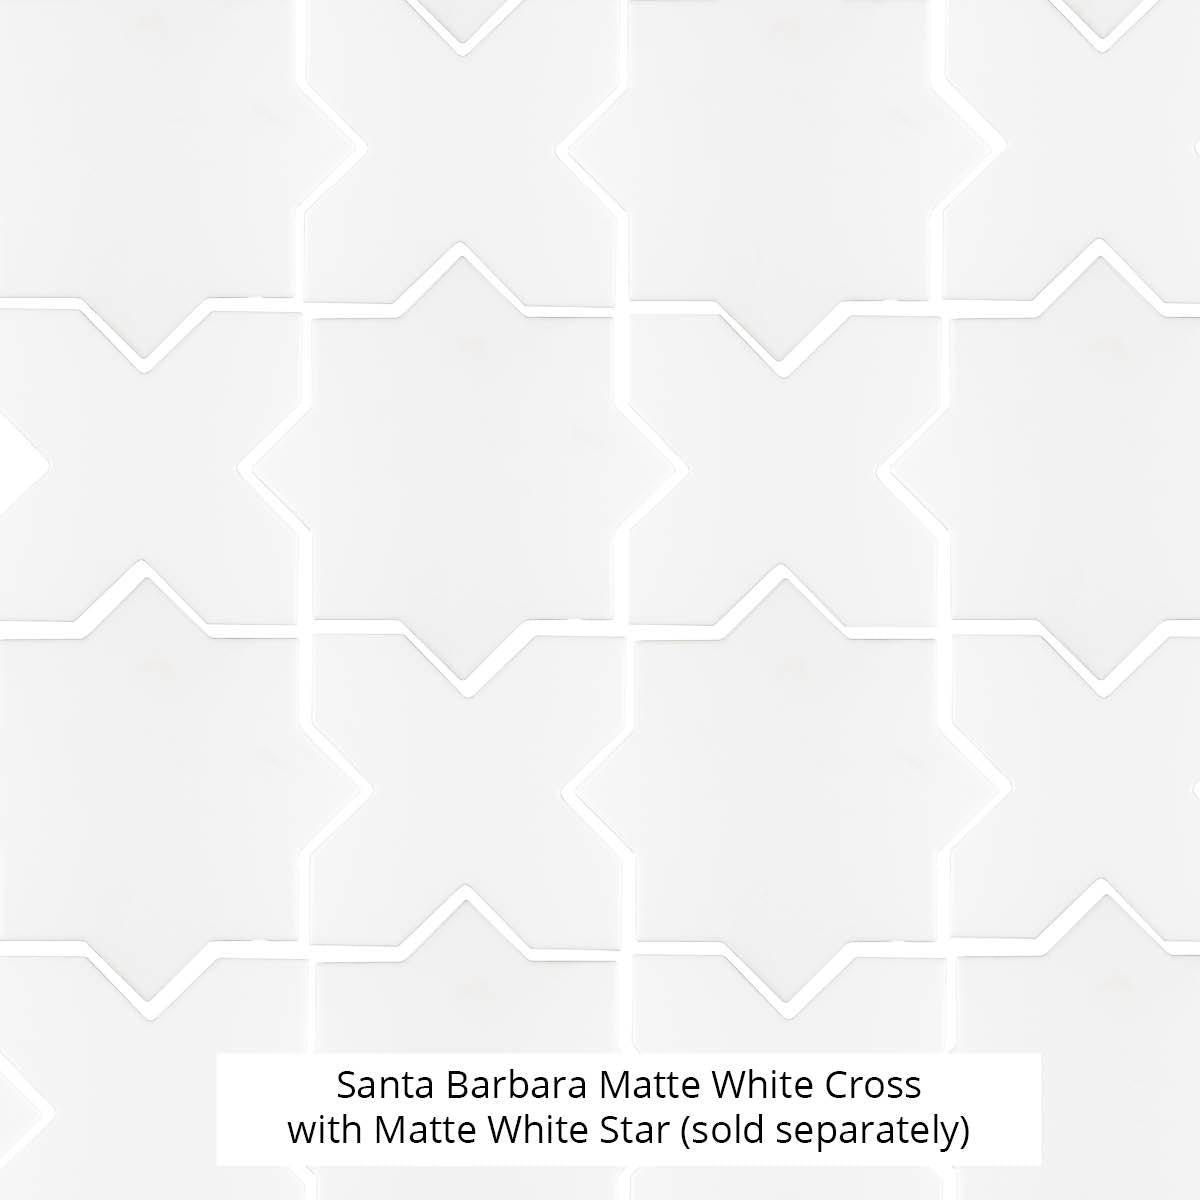 Santa Barbara Matte White Cross